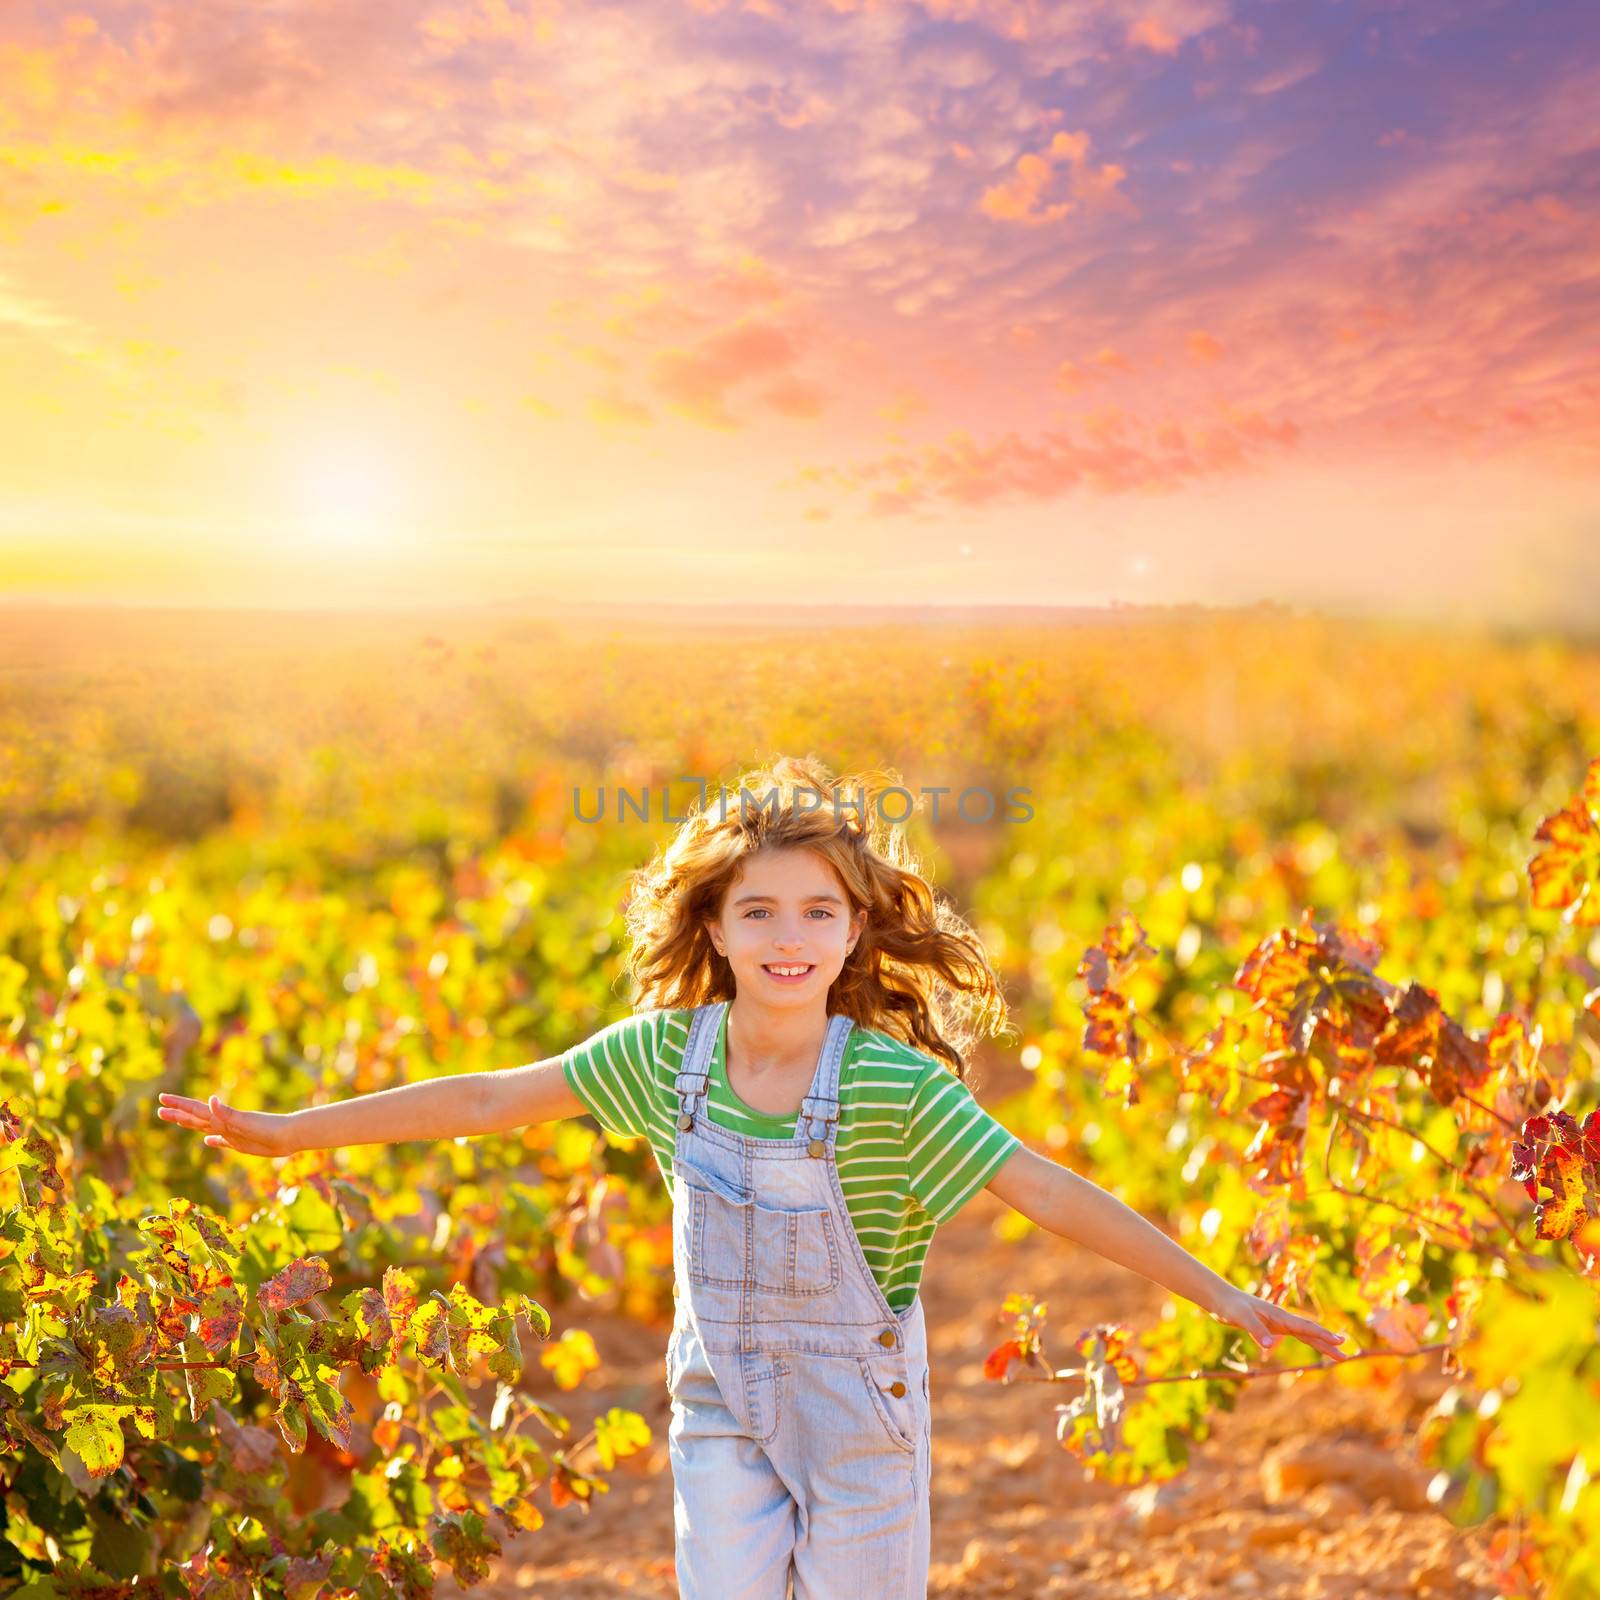 kid farmer girl running in vineyard field in autumn red leaves